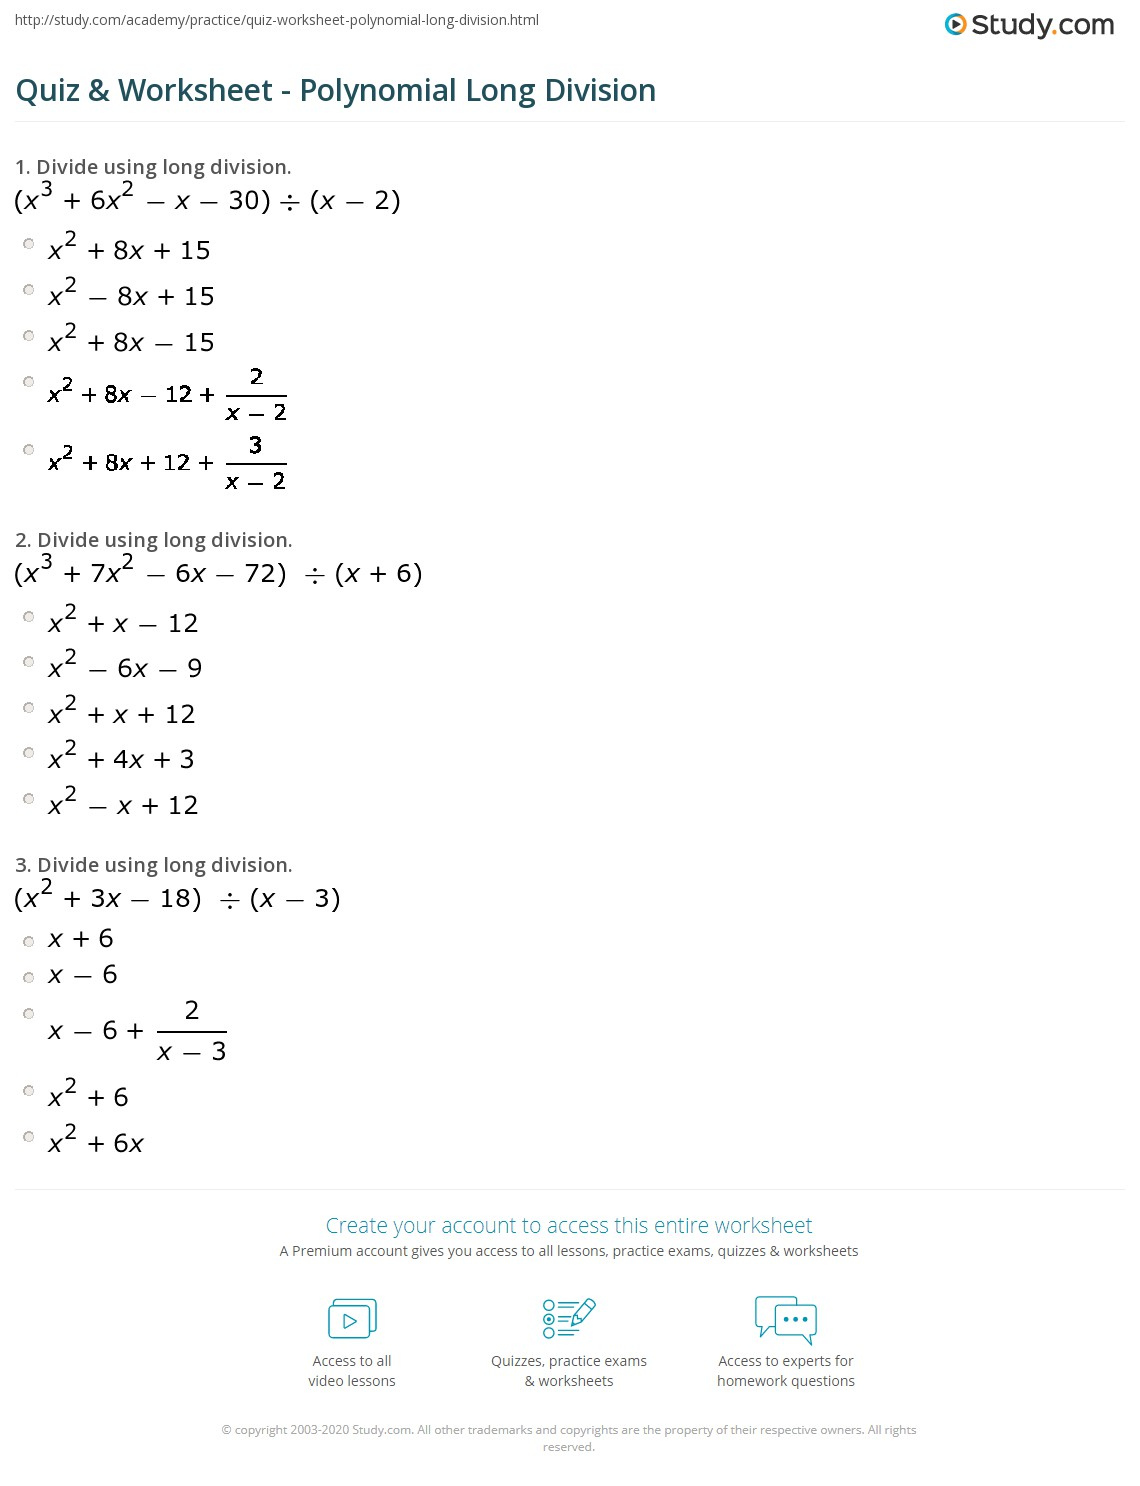 Quiz Worksheet Polynomial Long Division Study